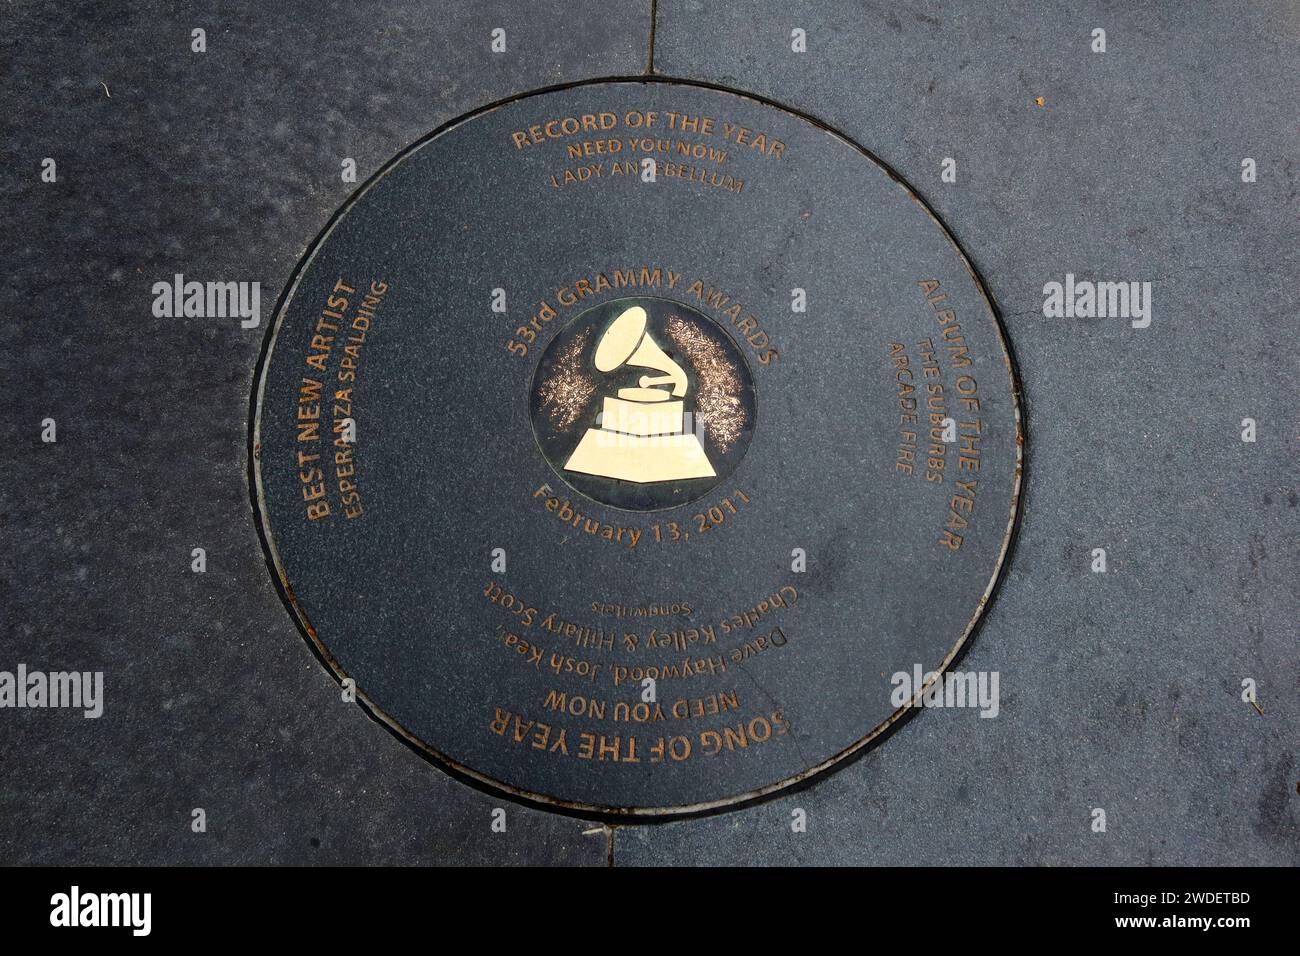 Los Angeles, Californie : The Grammy Walk of Fame - 53e Grammy Awards 2011 : LADY ANTEBELLUM, ARCADE FIRE et ESPERANZA SPALDING Banque D'Images